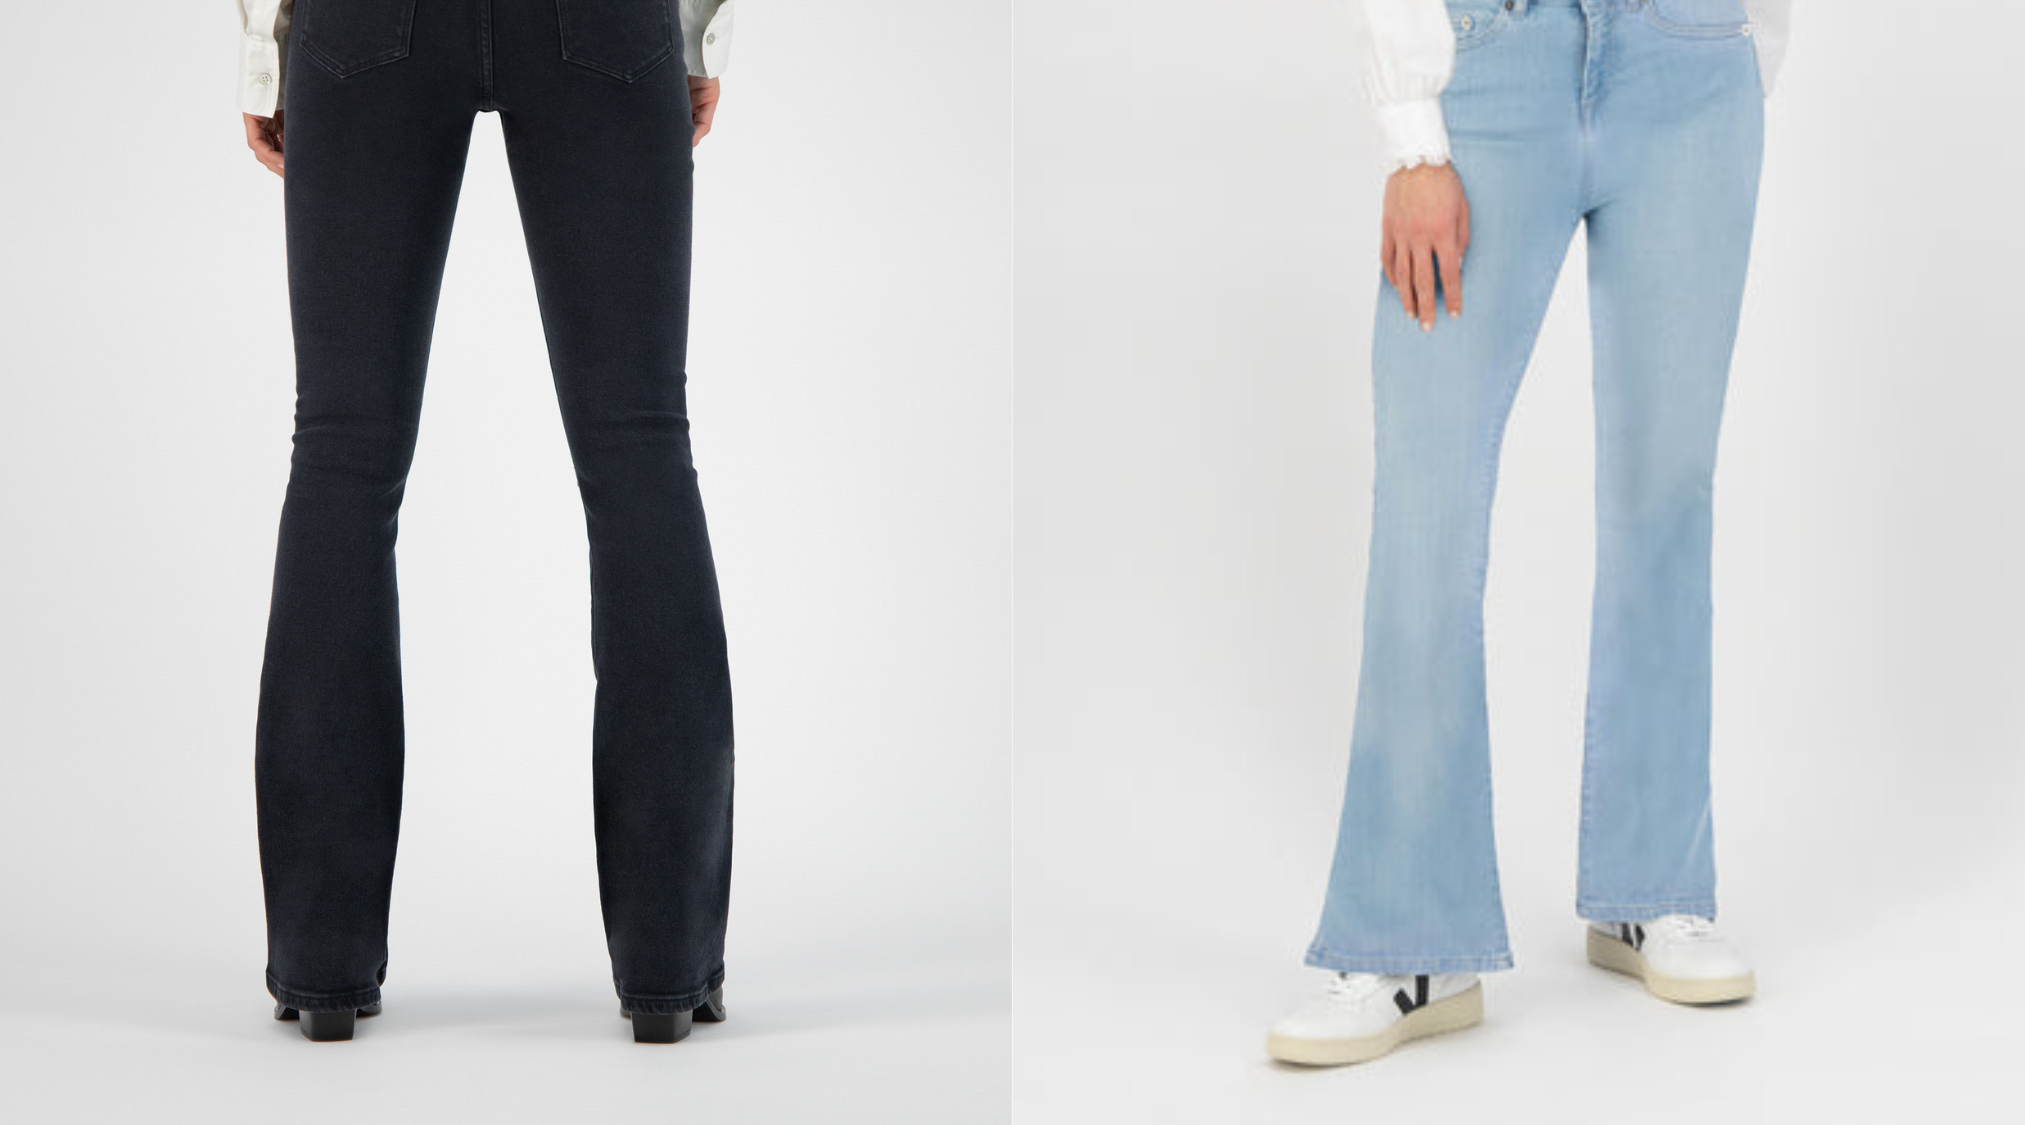 Shop duurzame flared jeans bij Sophie Stone